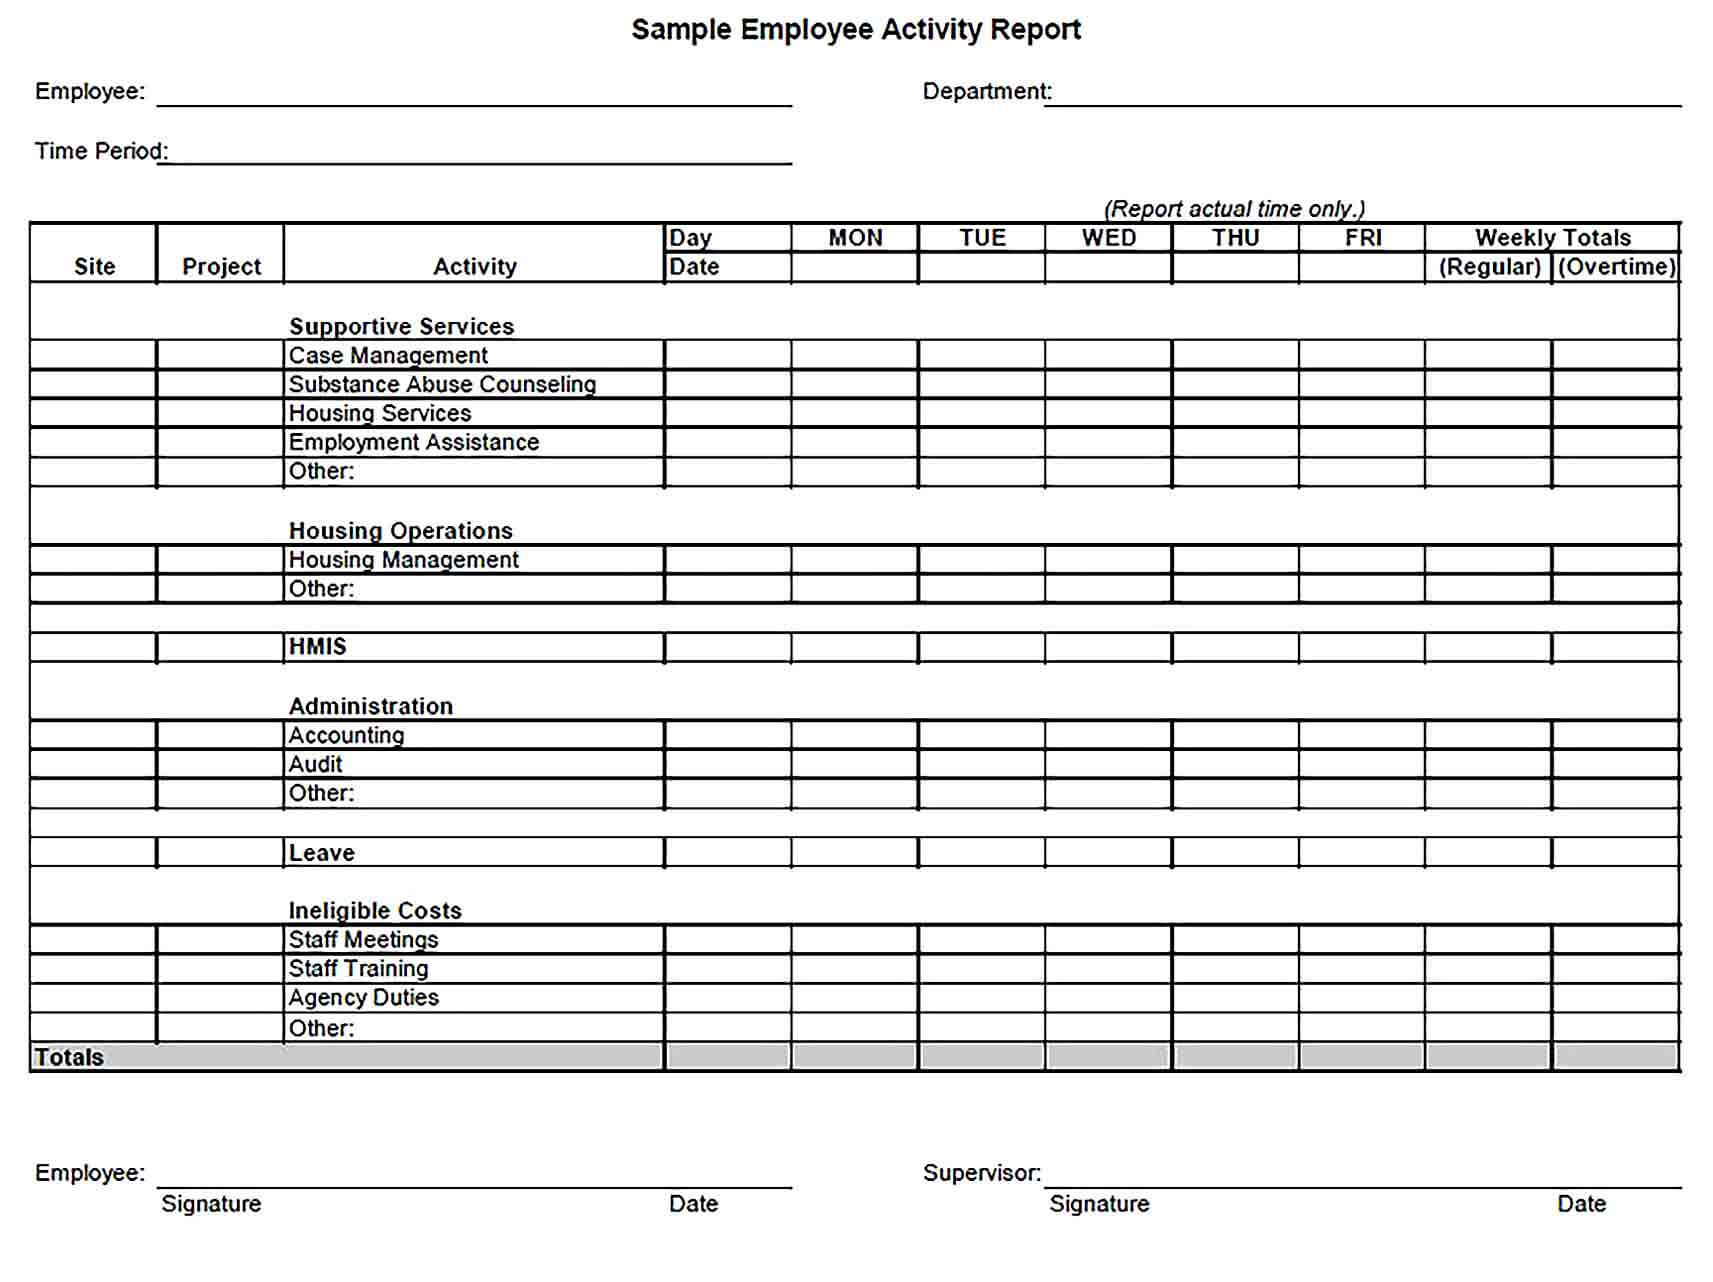 Sample Employee Activity Report